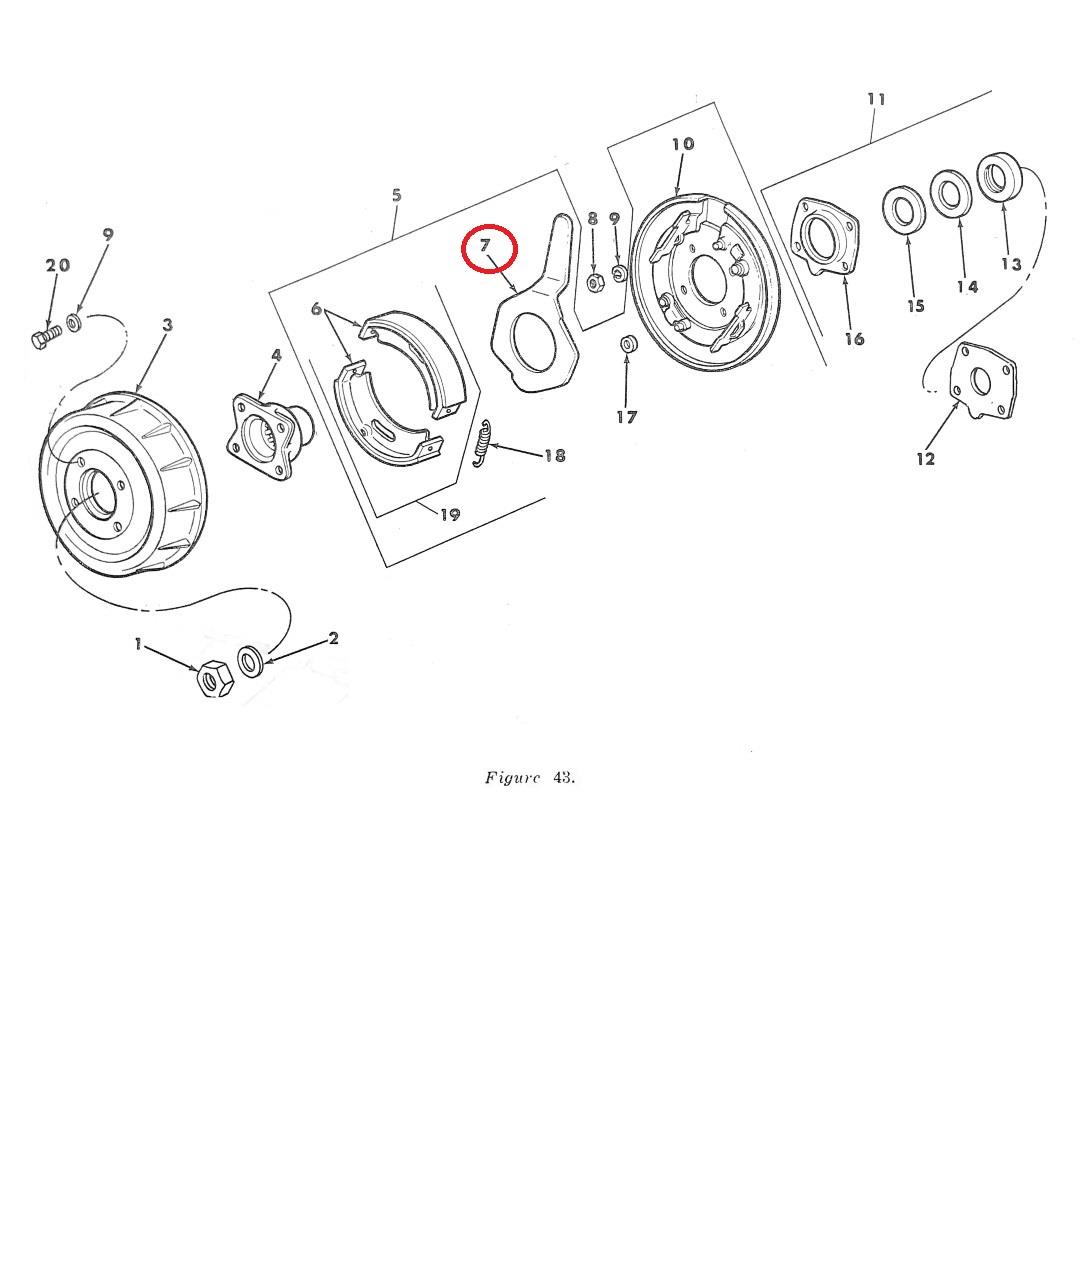 MU-216 | MU-216 Brake Actuator Mule M274 Parts Diagram (Large).JPG